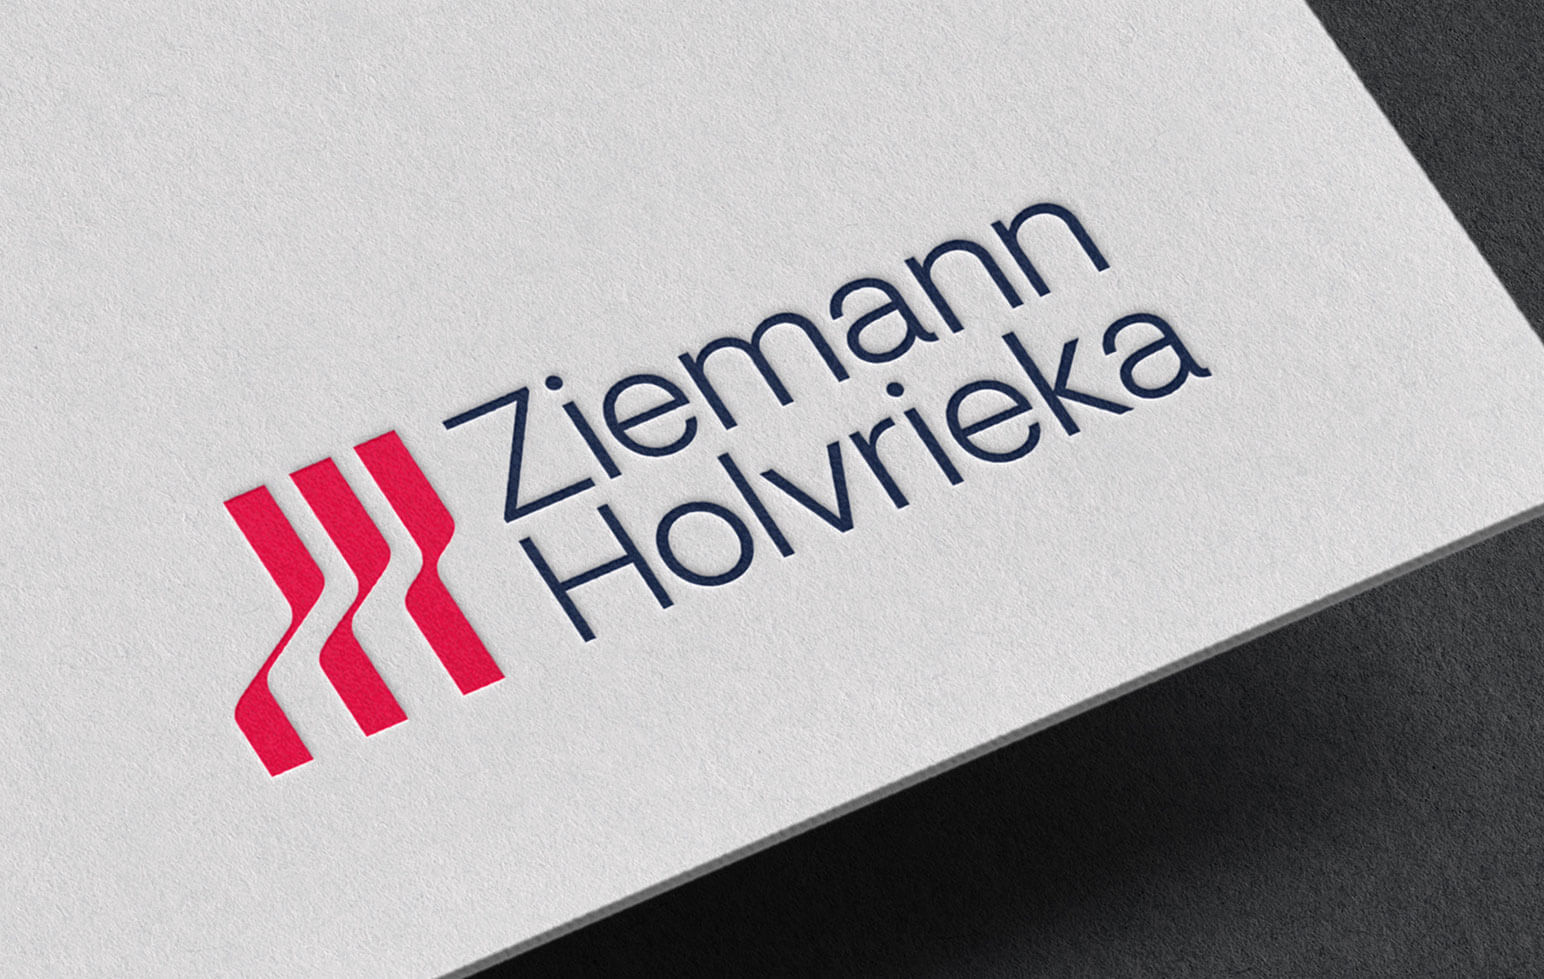 Ziemann Holvrieka new logo